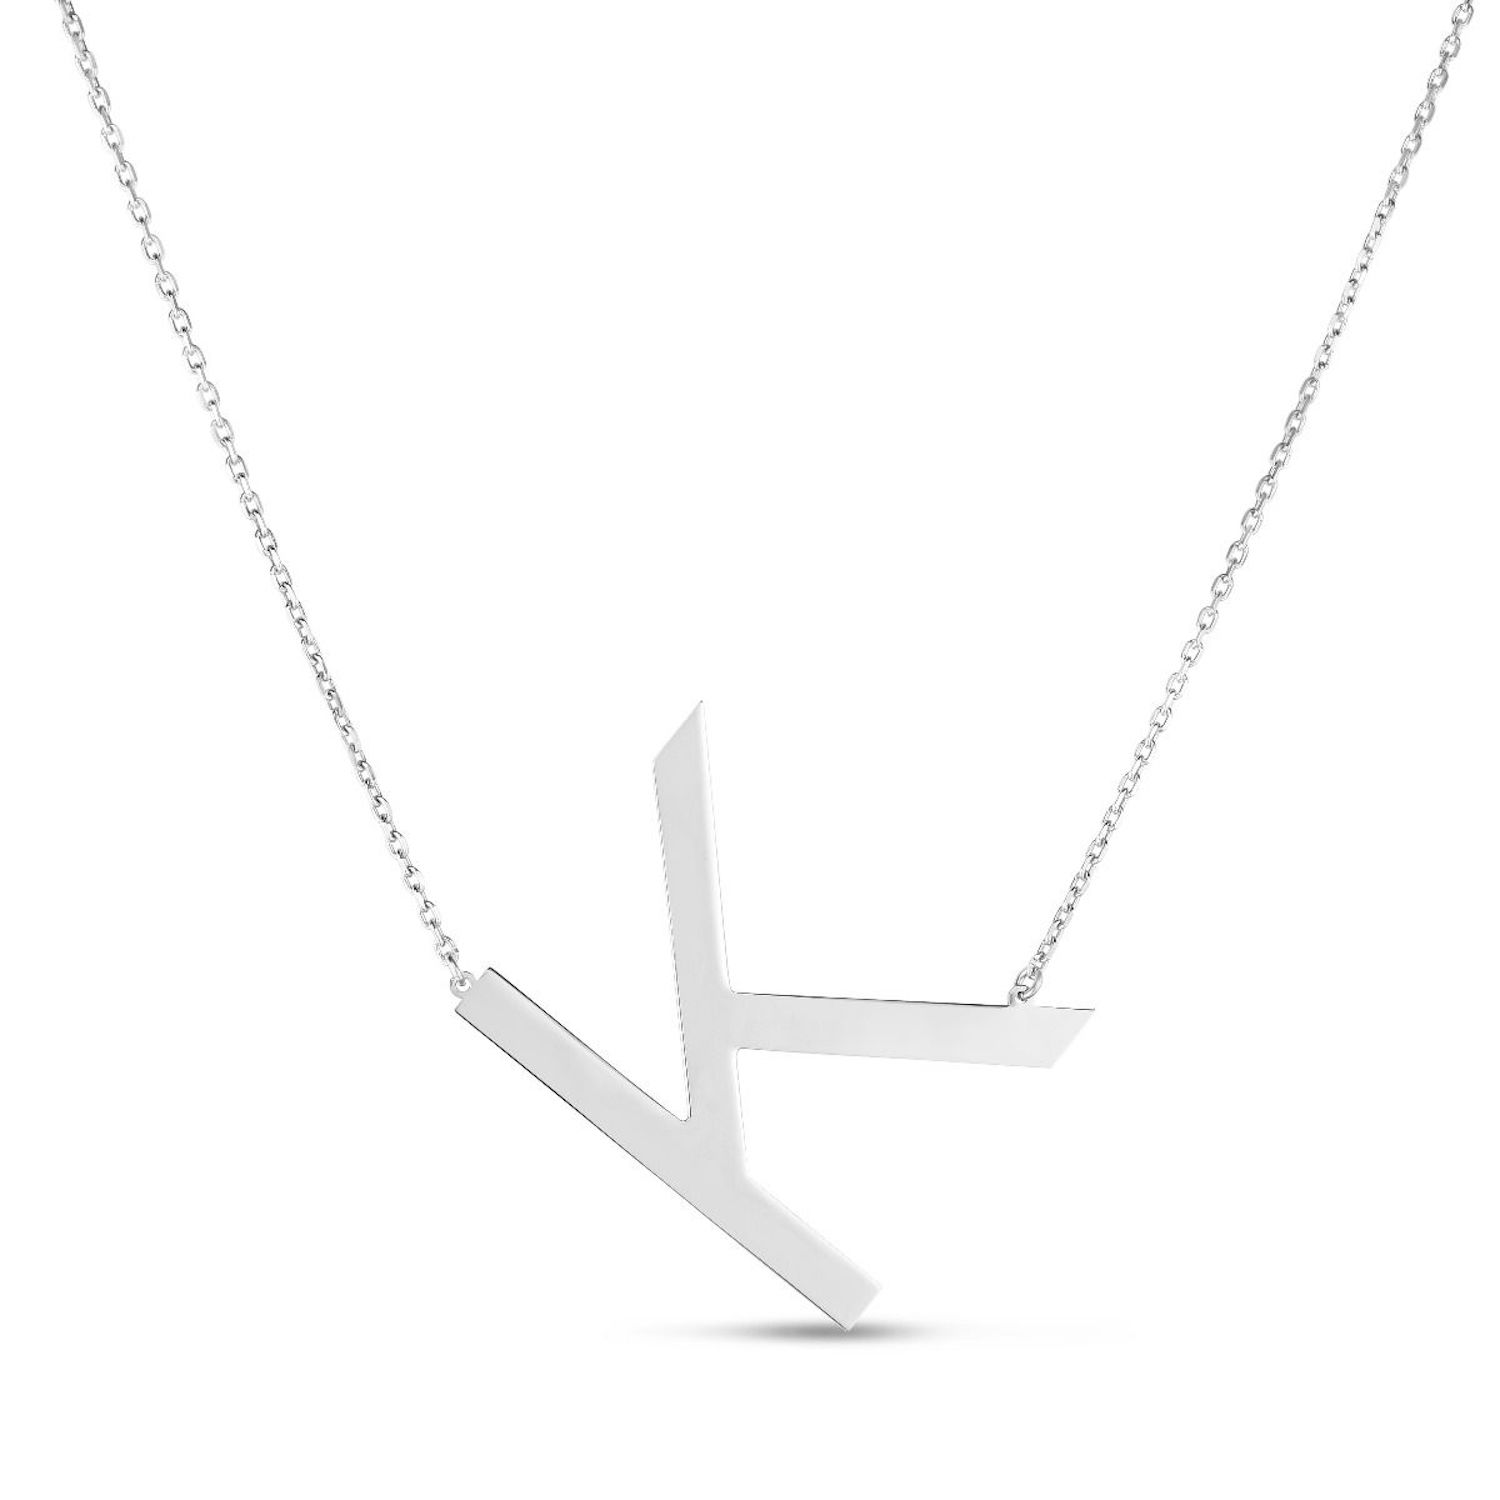 Sterling Silver Sideways Initials Letter Pendant Necklace 16"-18" Adj. 1.5" - K